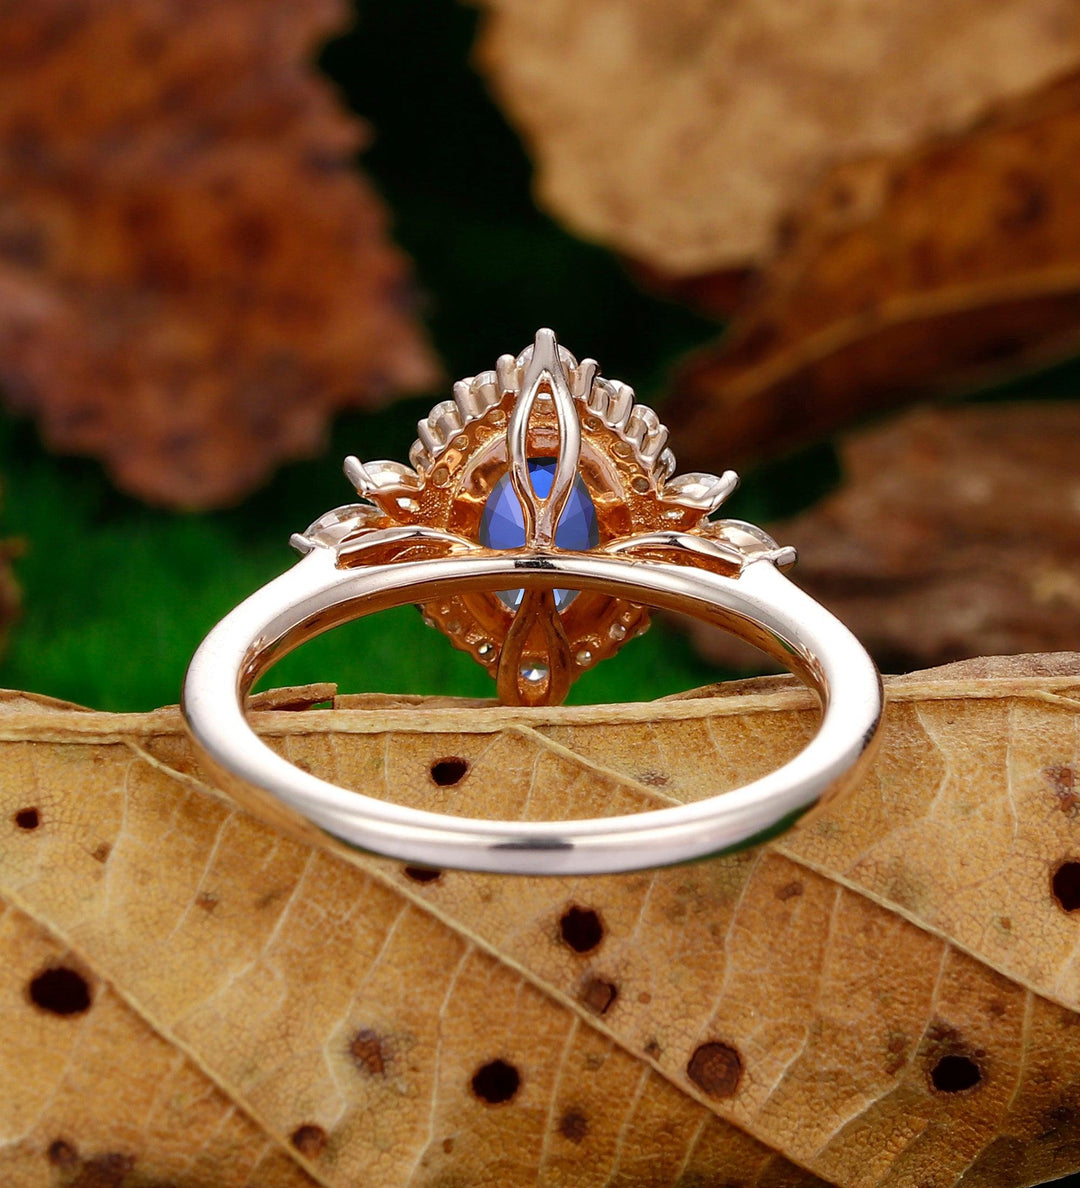 Oval Cut 1.5Carat Sapphire Engagement Ring Vintage Unique Moissanite Wedding Promise Ring - Esdomera